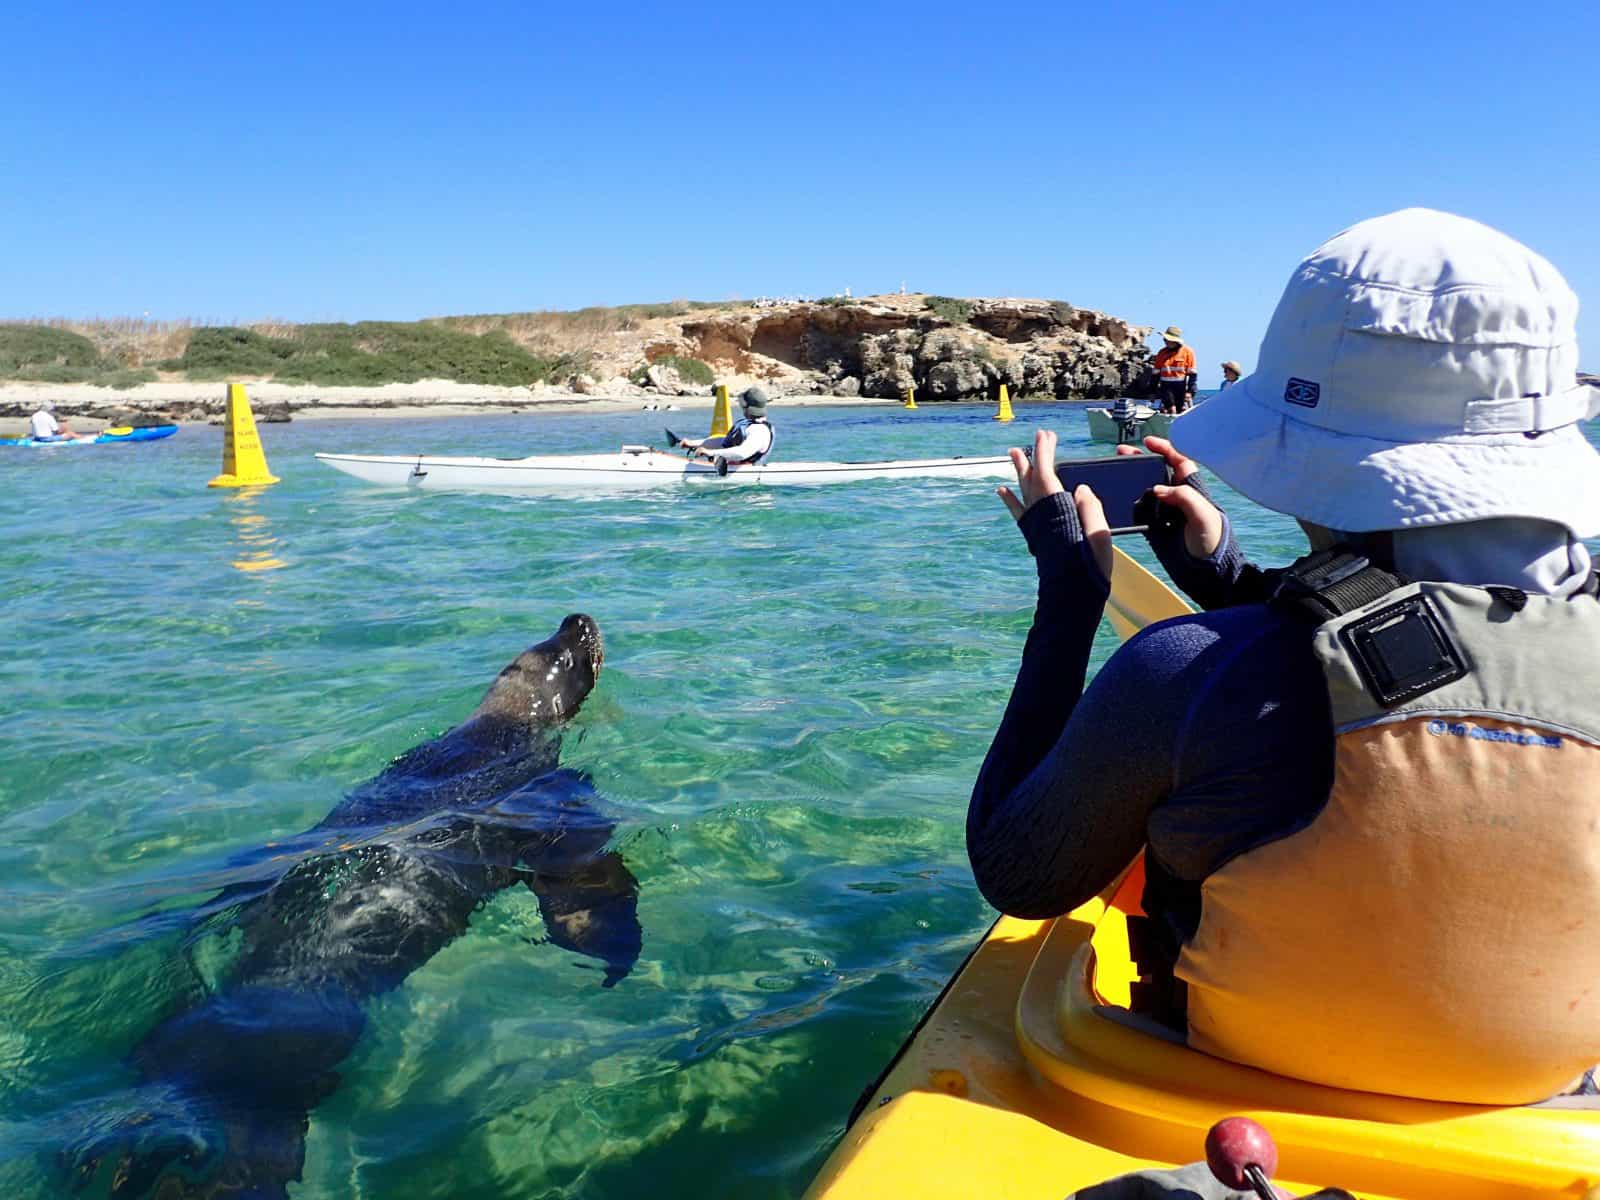 Capricorn Sea Kayaking, Shoalwater, Western Australia